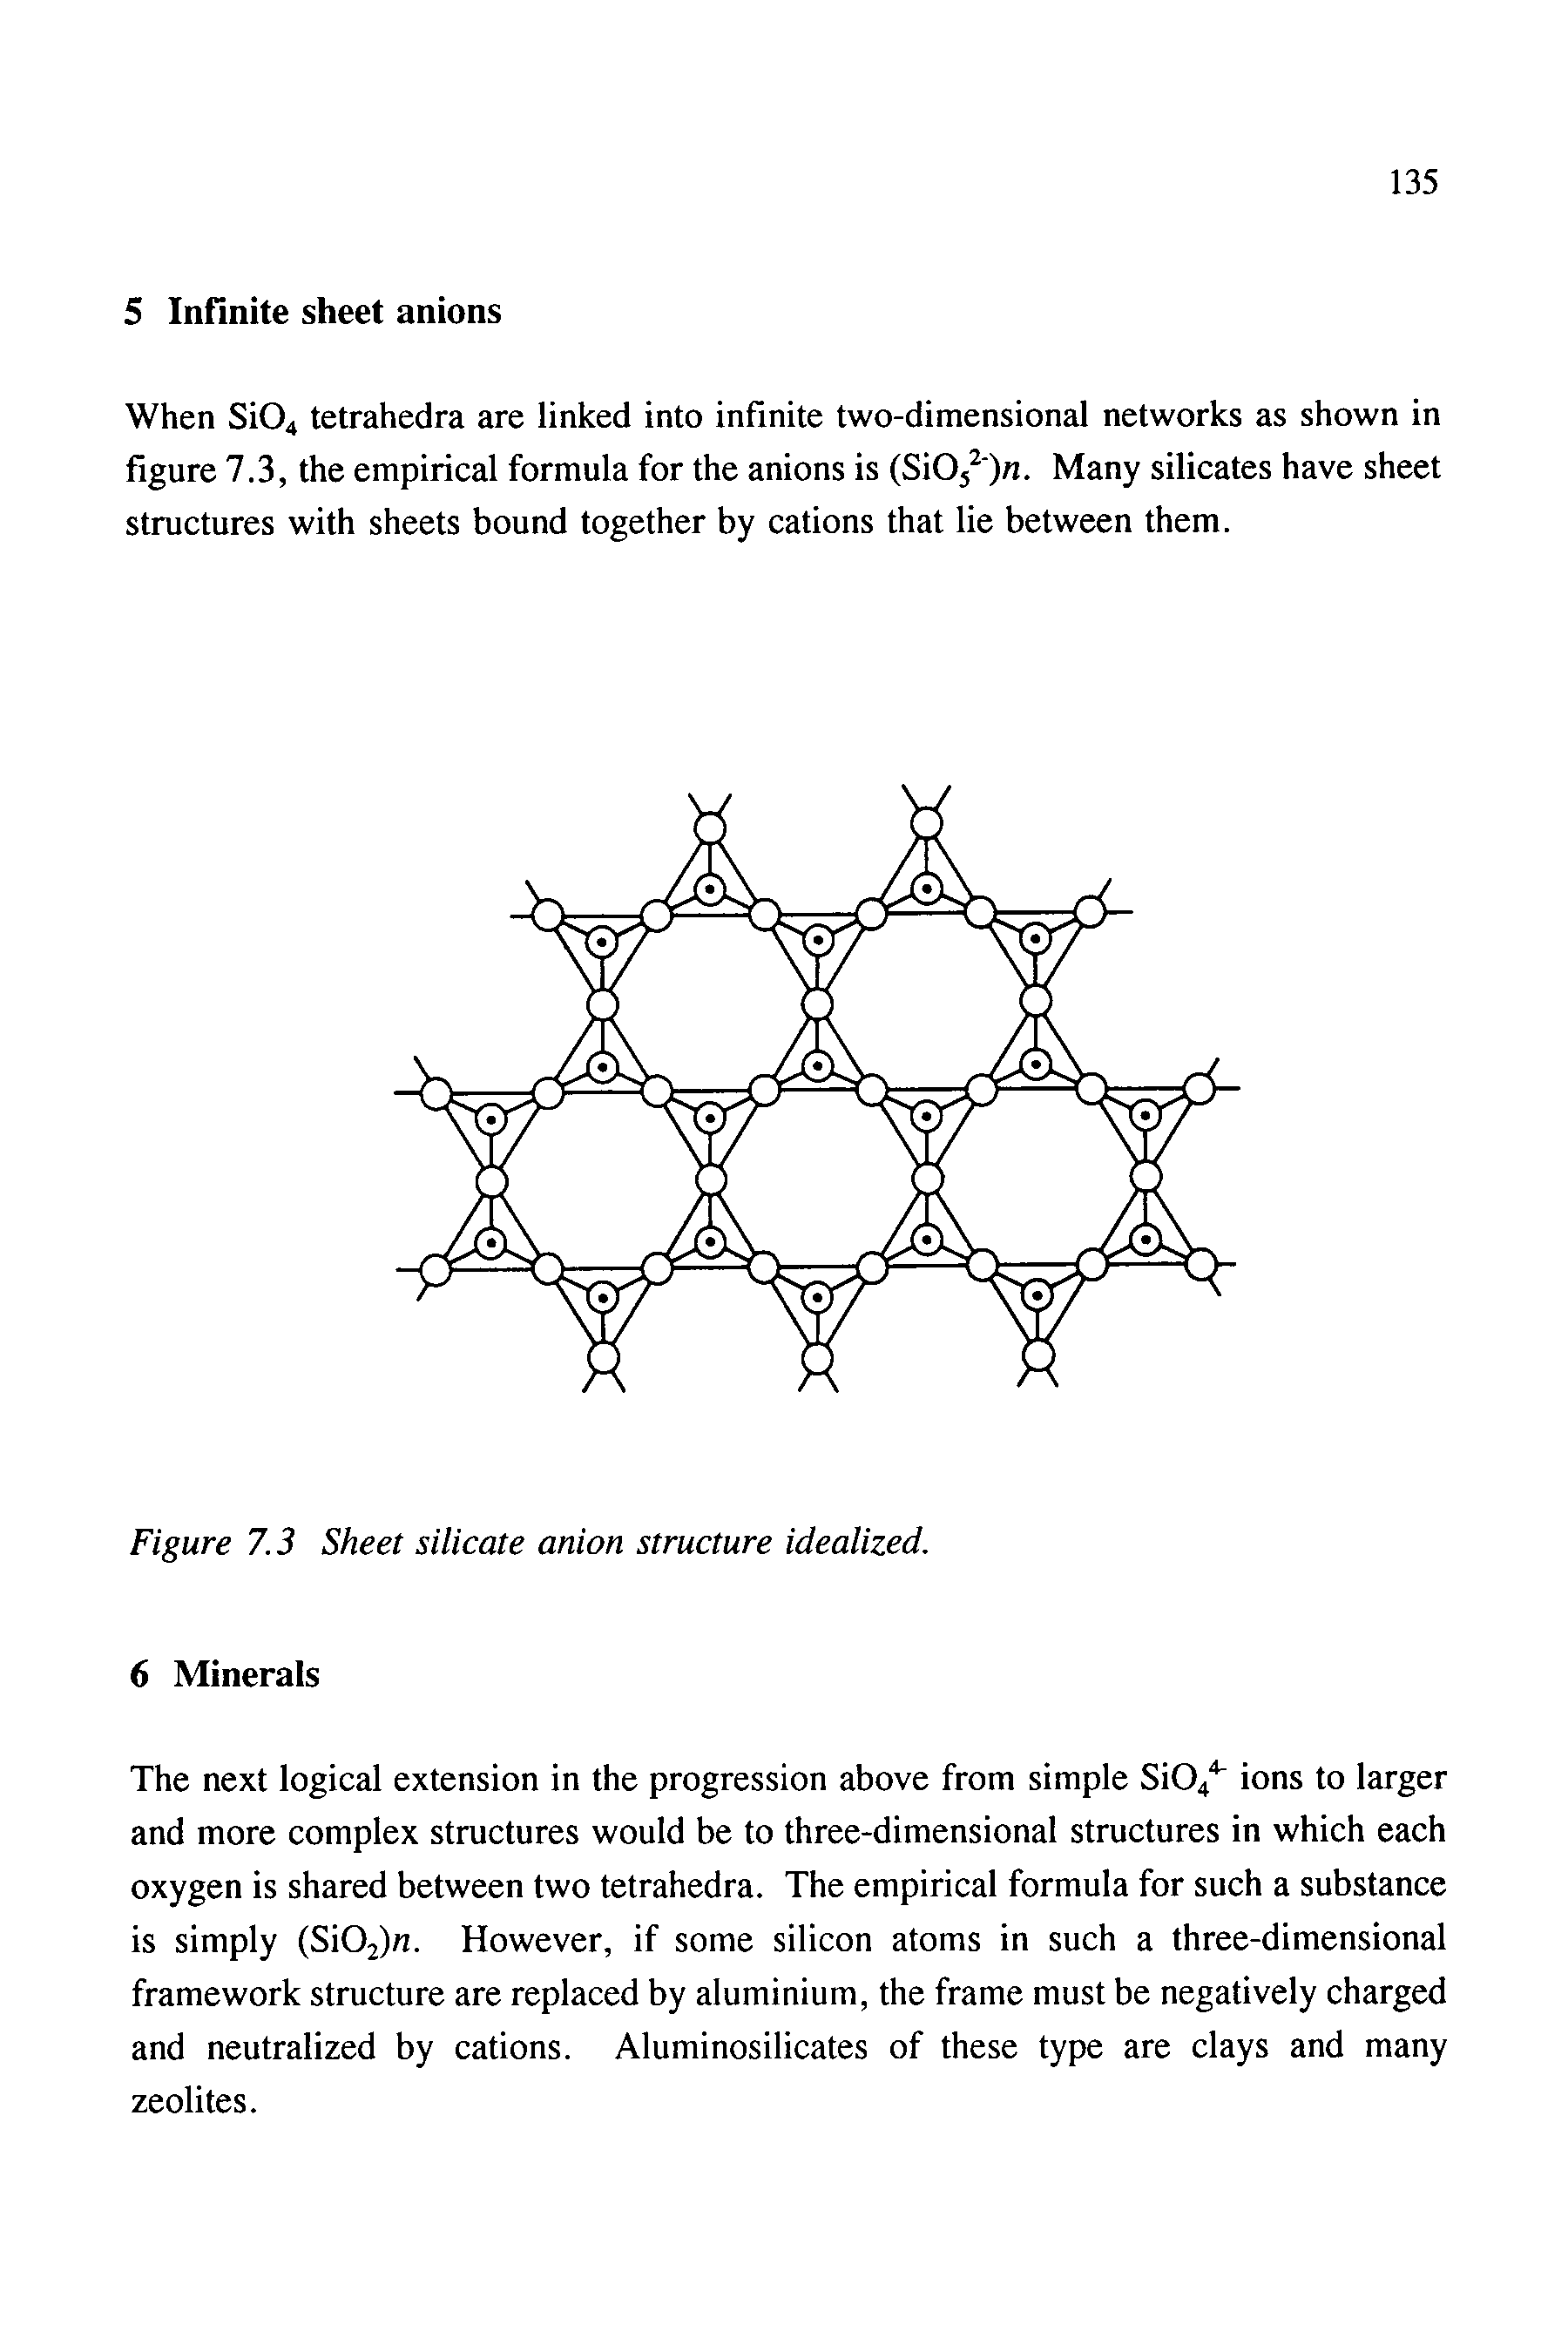 Figure 7.3 Sheet silicate anion structure idealized.